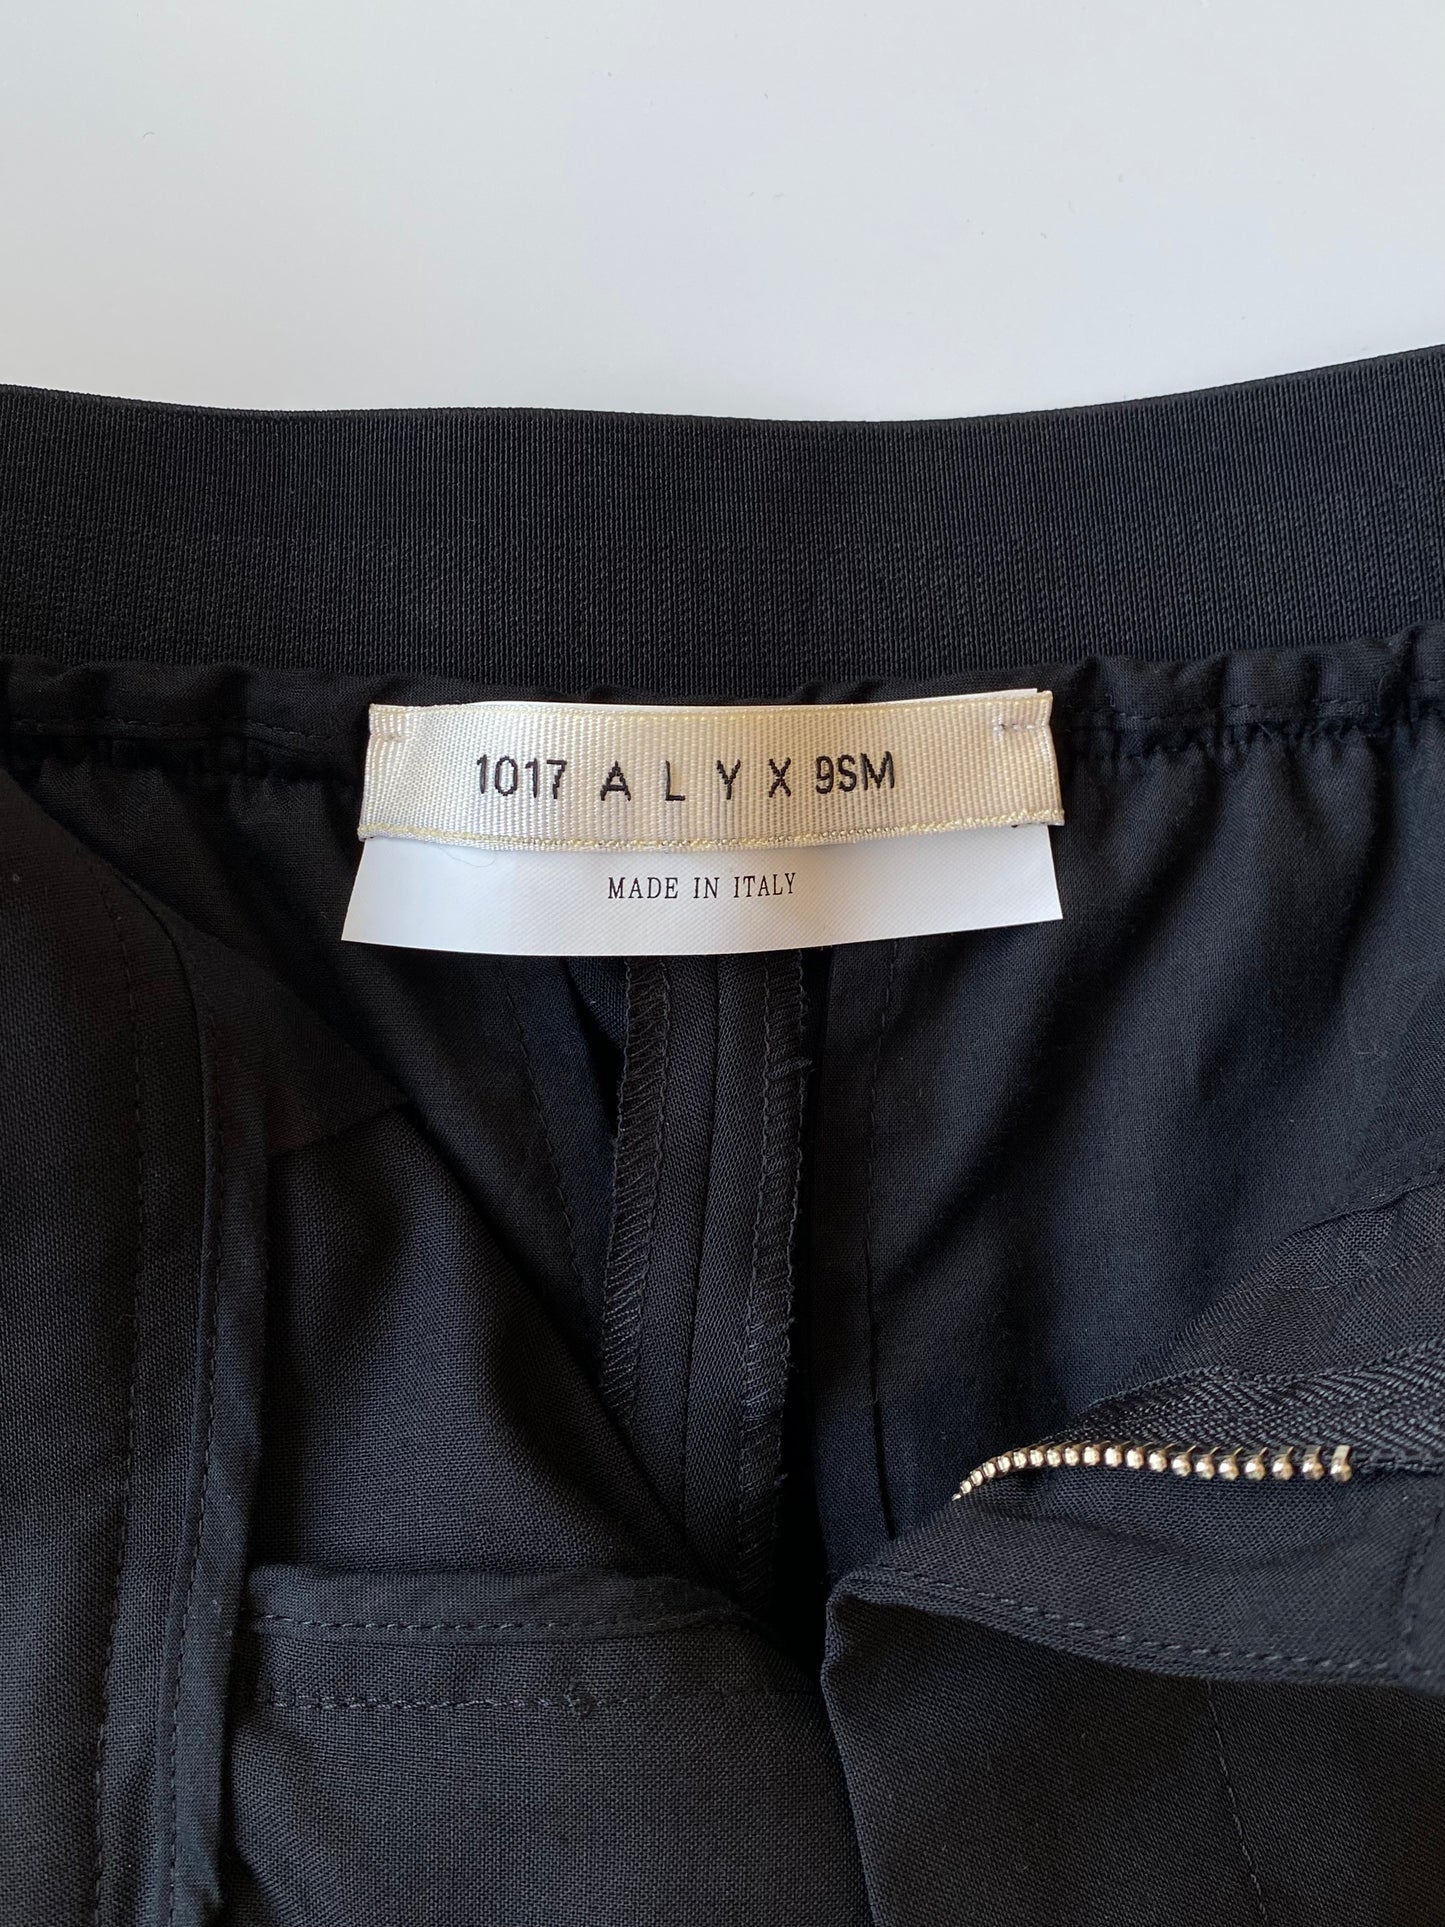 Alyx Metal Buckle Suit Pants